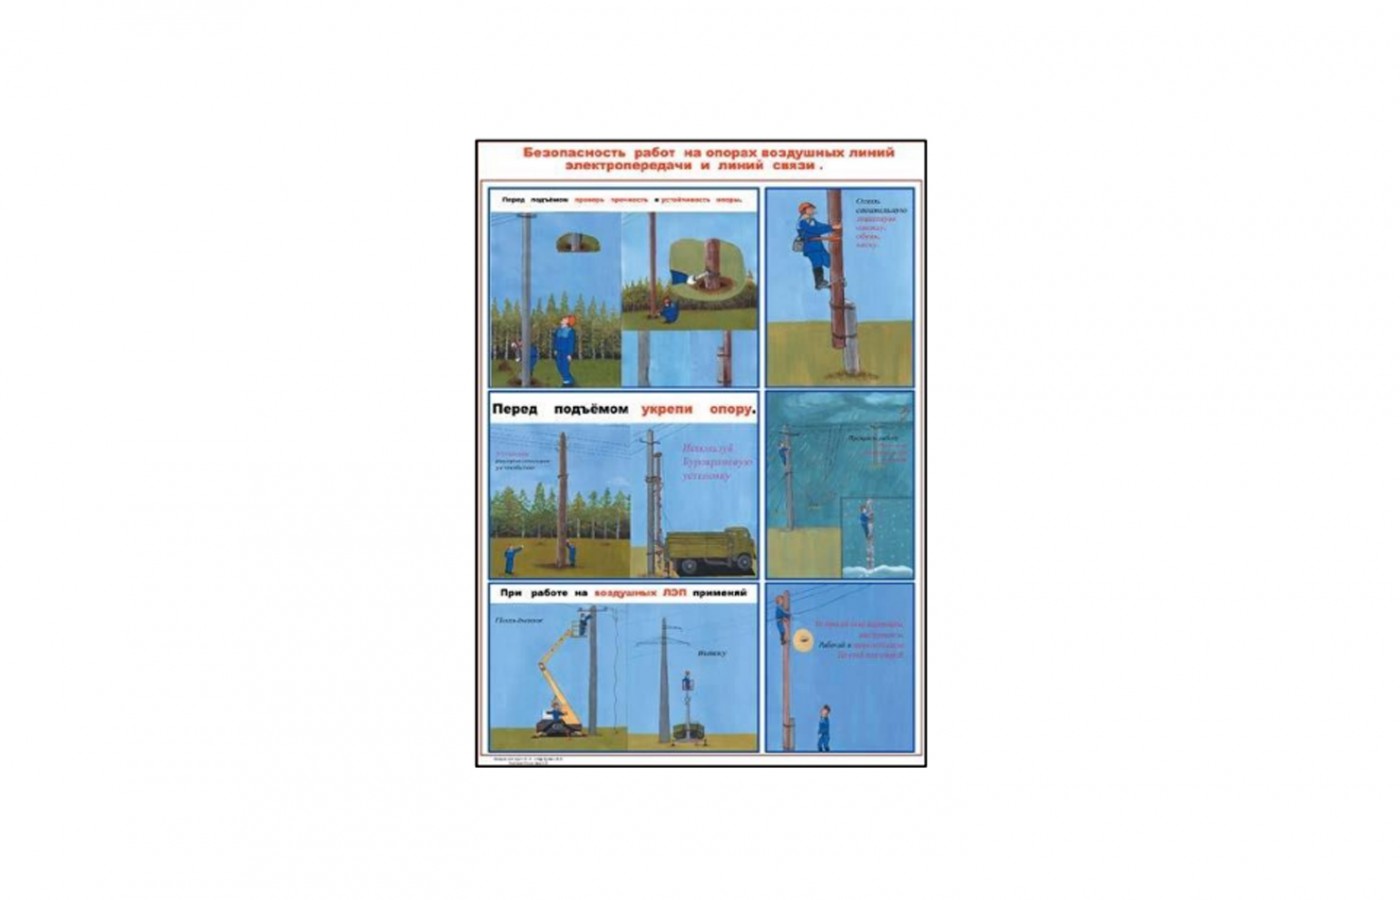 Плакат "Безопасность работ на опорах воздушных линий электропередачи и линий связи"